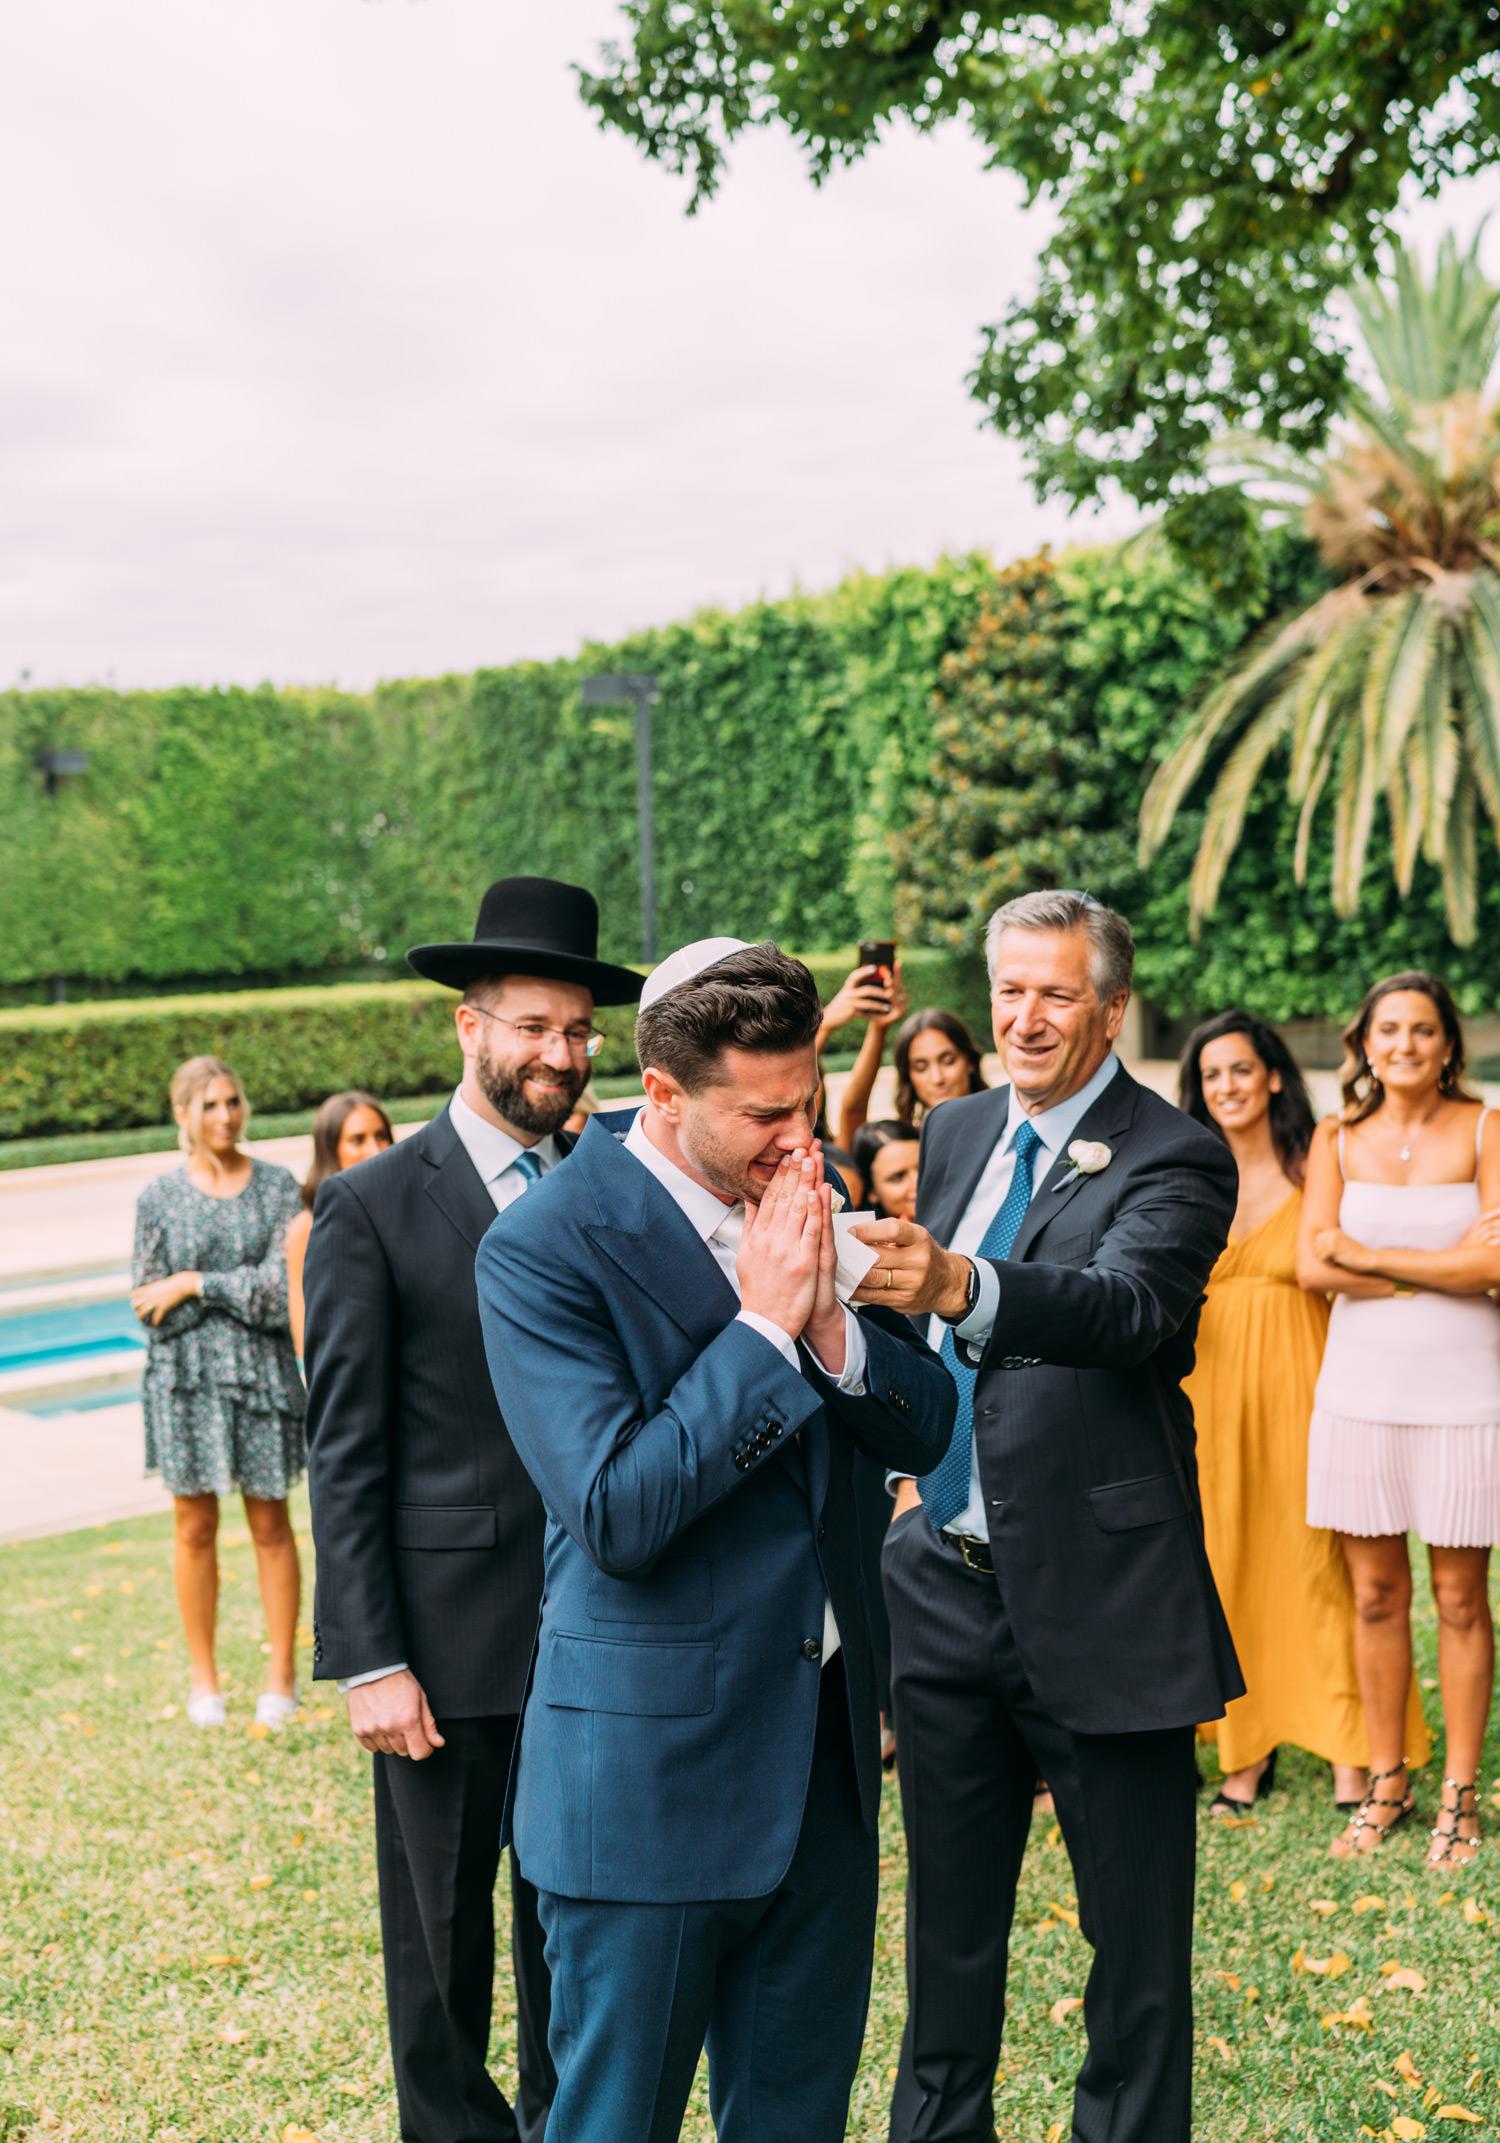 Jewish Bedeken wedding